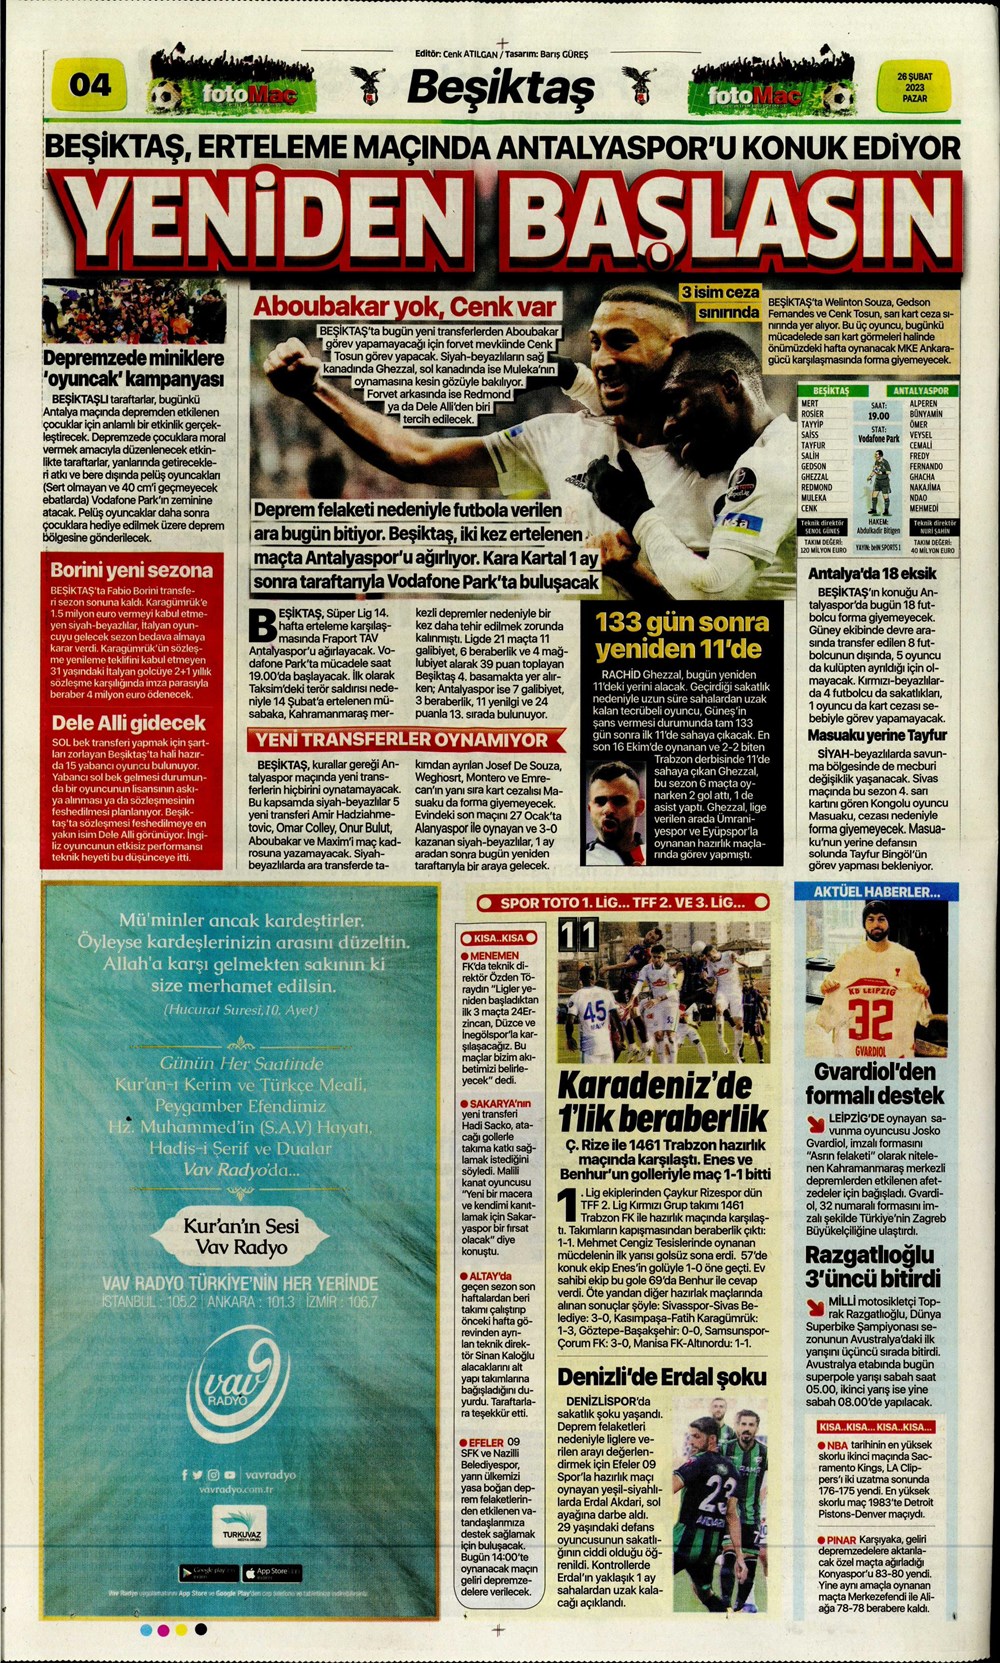 "Valenci'ağa' böyle istedi" - Sporun manşetleri  - 13. Foto